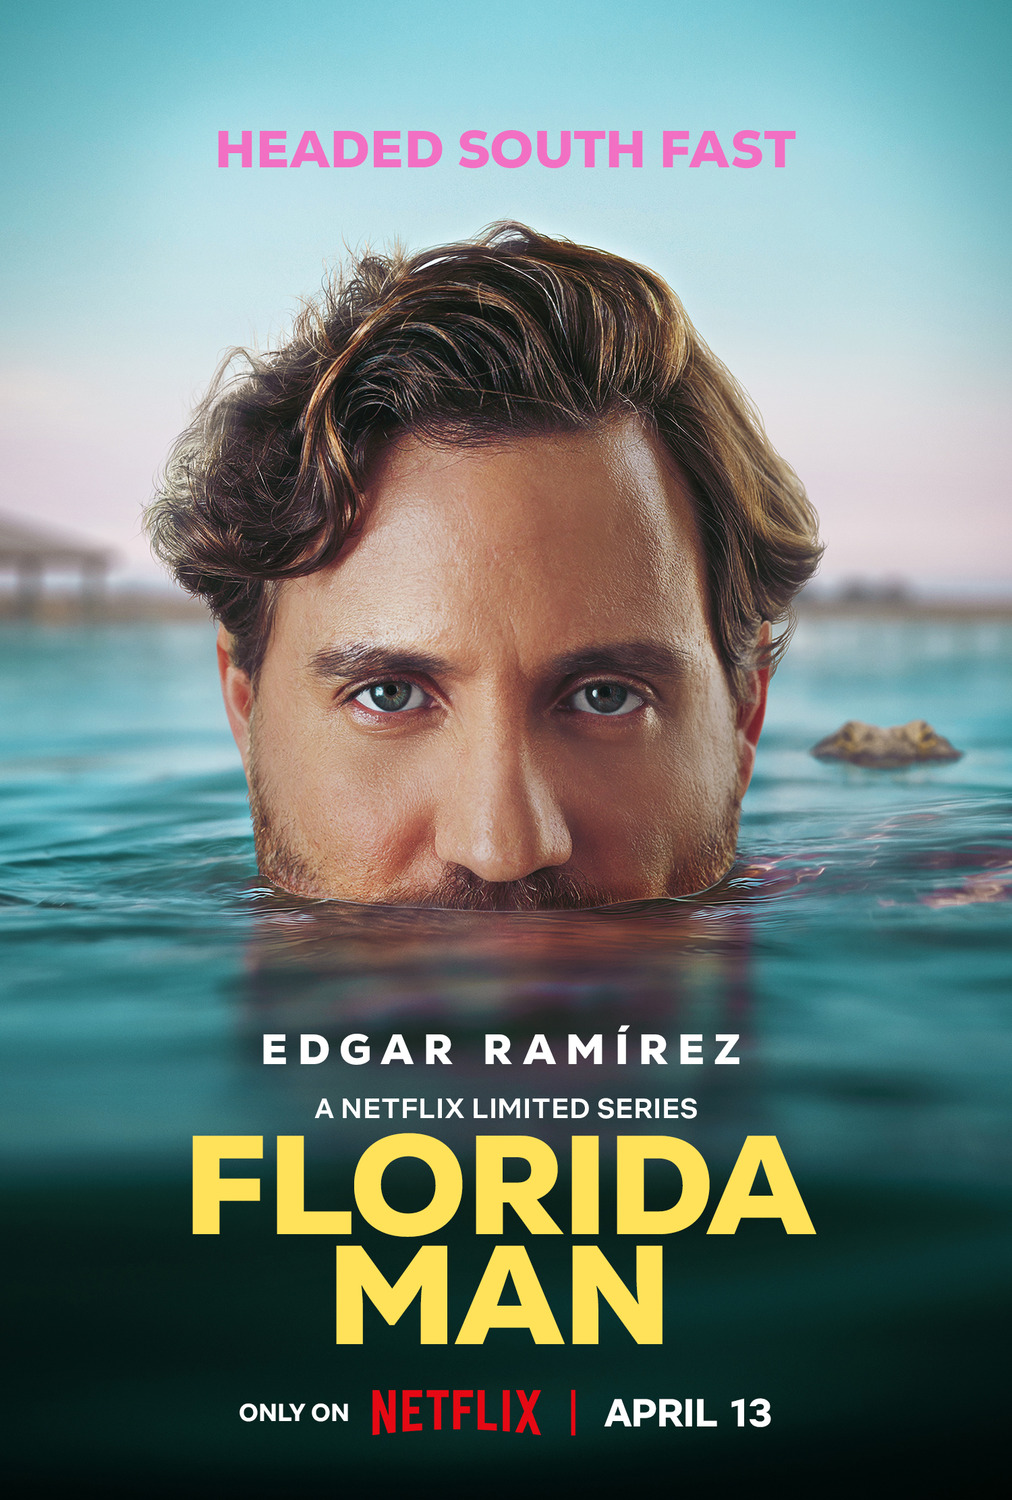 Florida Man (#7 of 20): Extra Large Movie Poster Image - IMP Awards